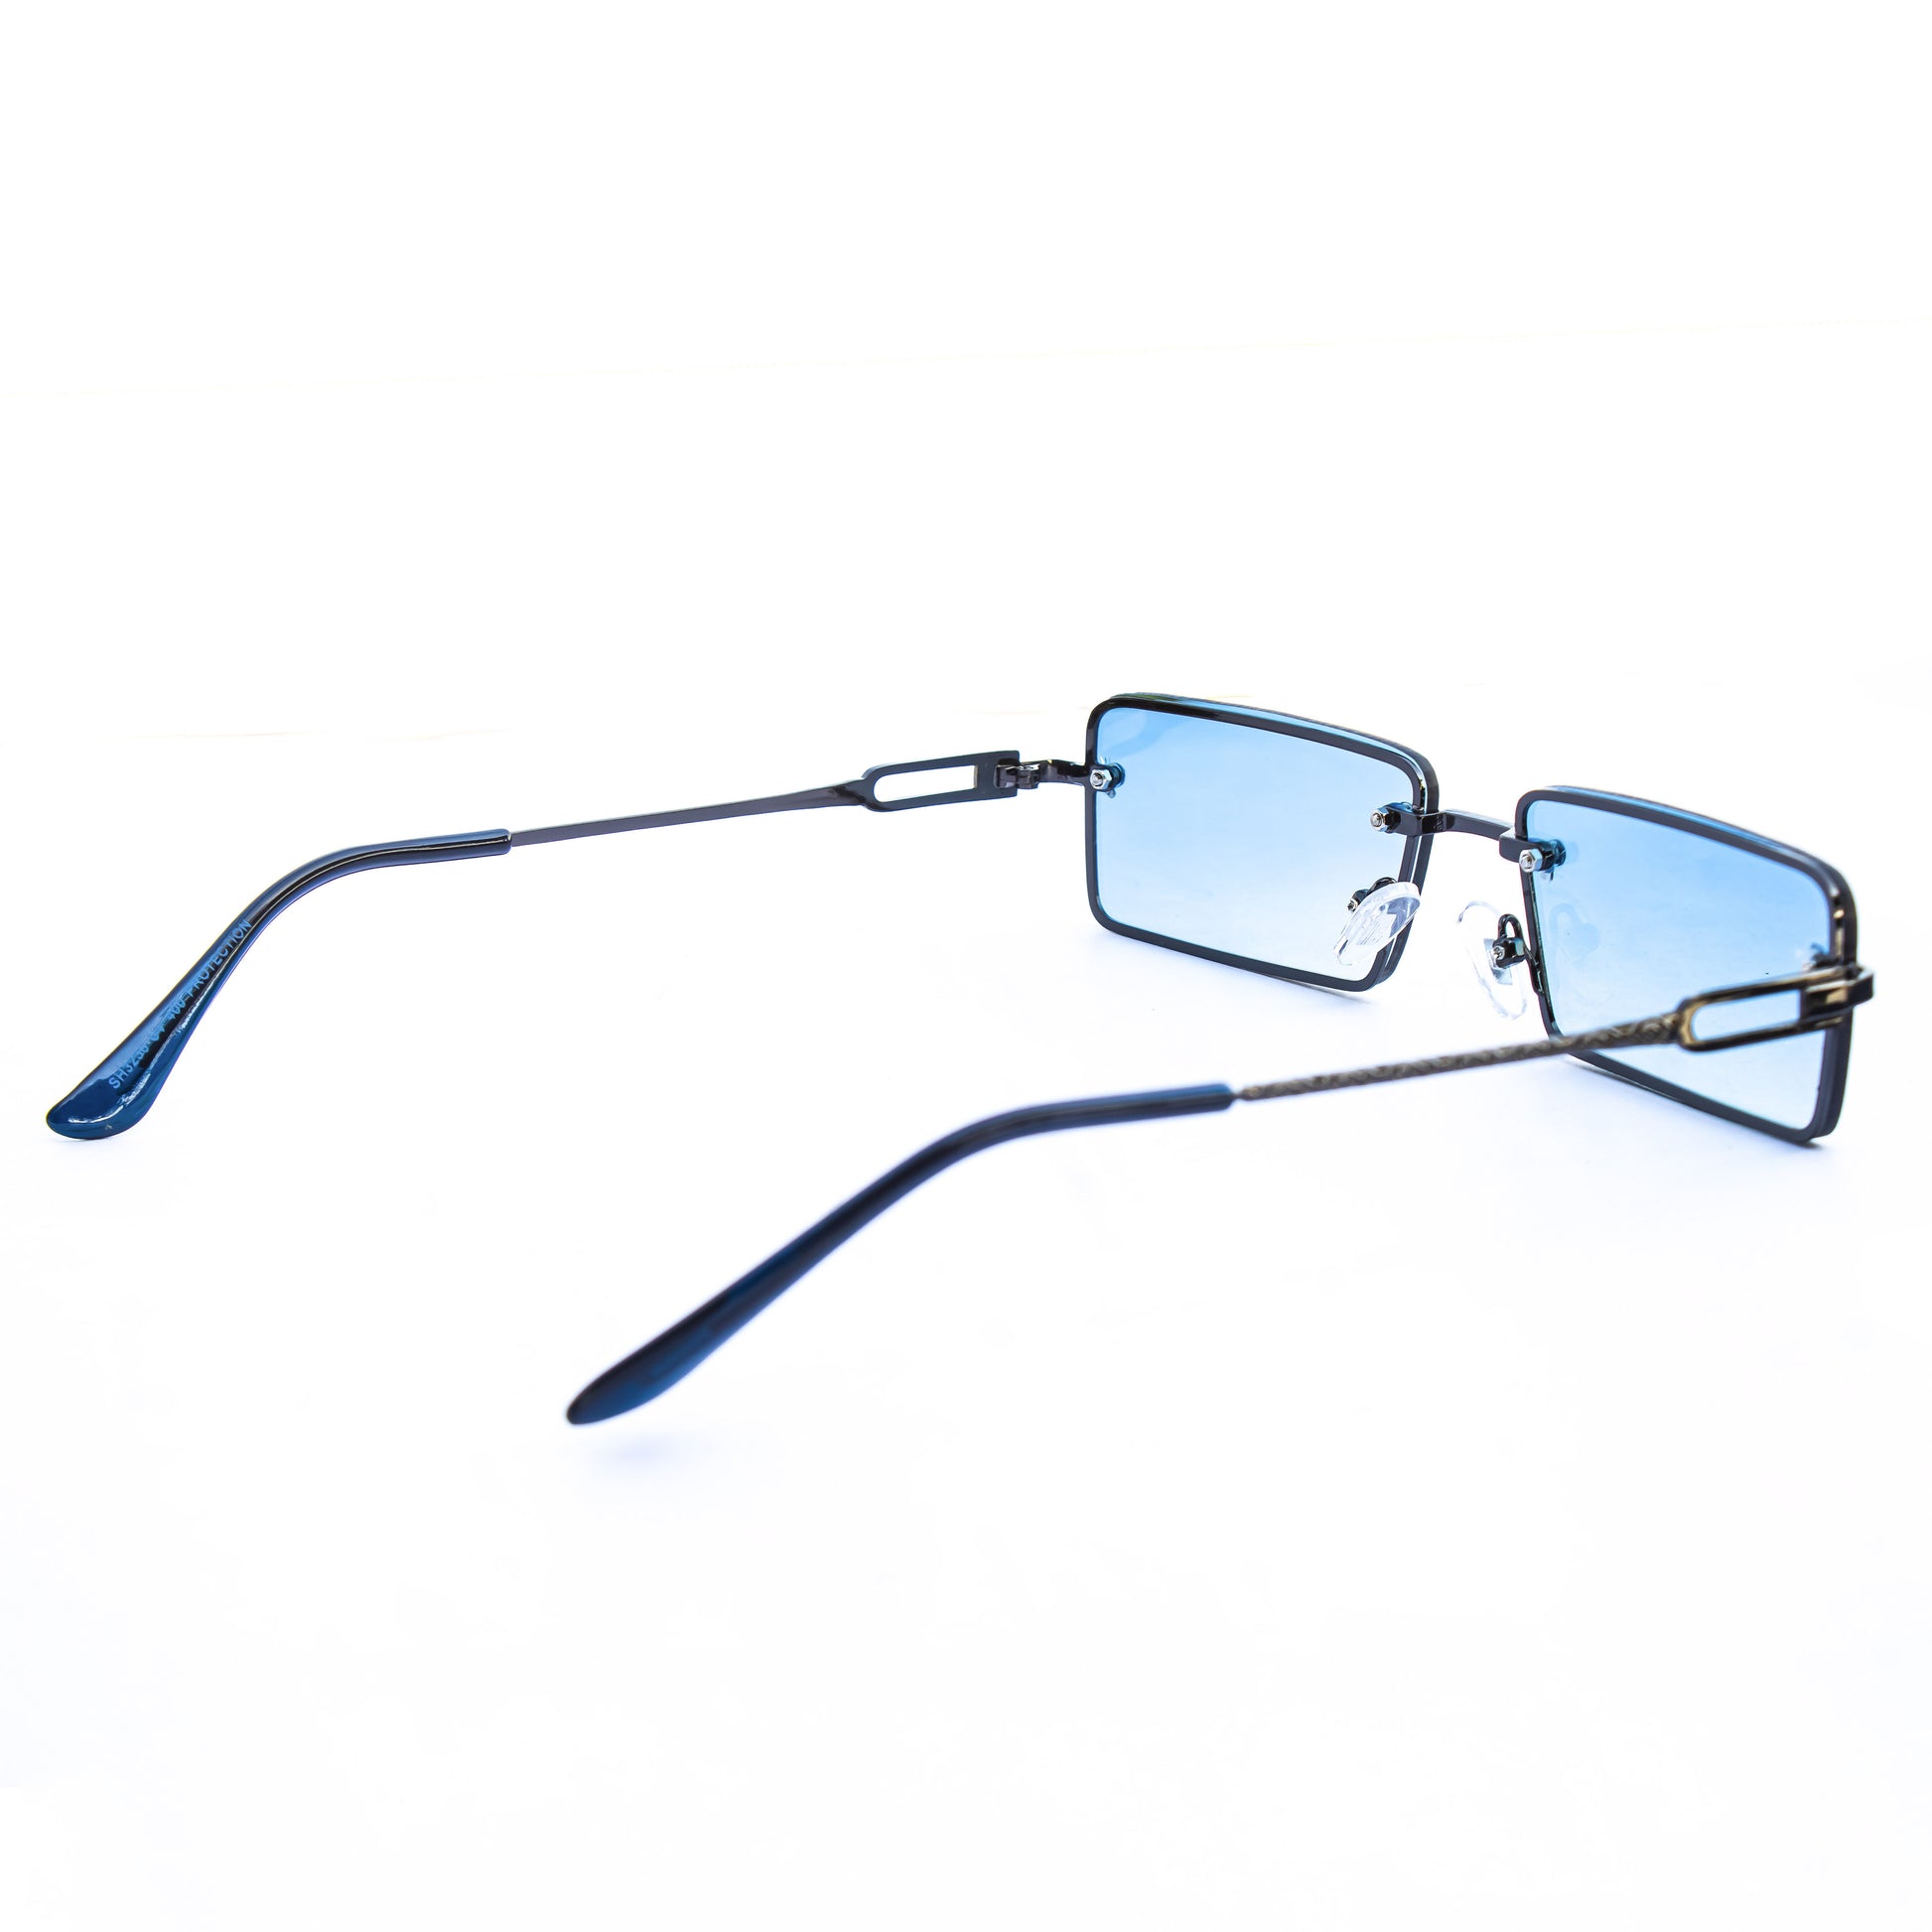  metal square rectangle sunglasses for men